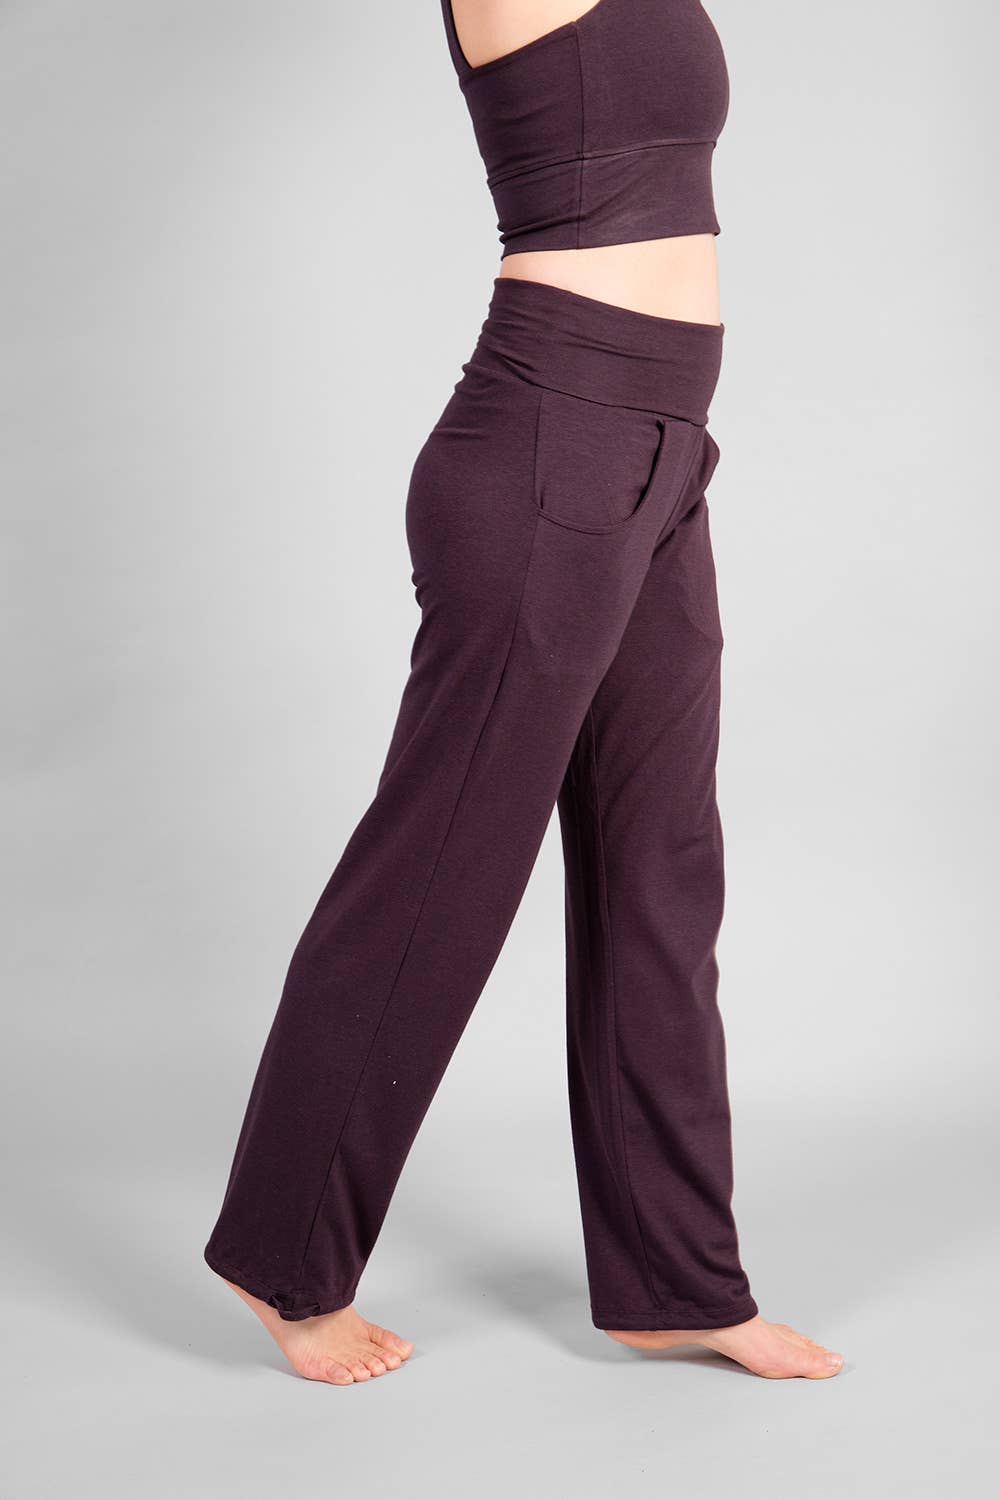 Buy Women's Yoga Pants - Workout Running Tummy Control Stretch Power Flex  Modal Drawstring Long Leggings Pajama Pants - Black,S at Amazon.in